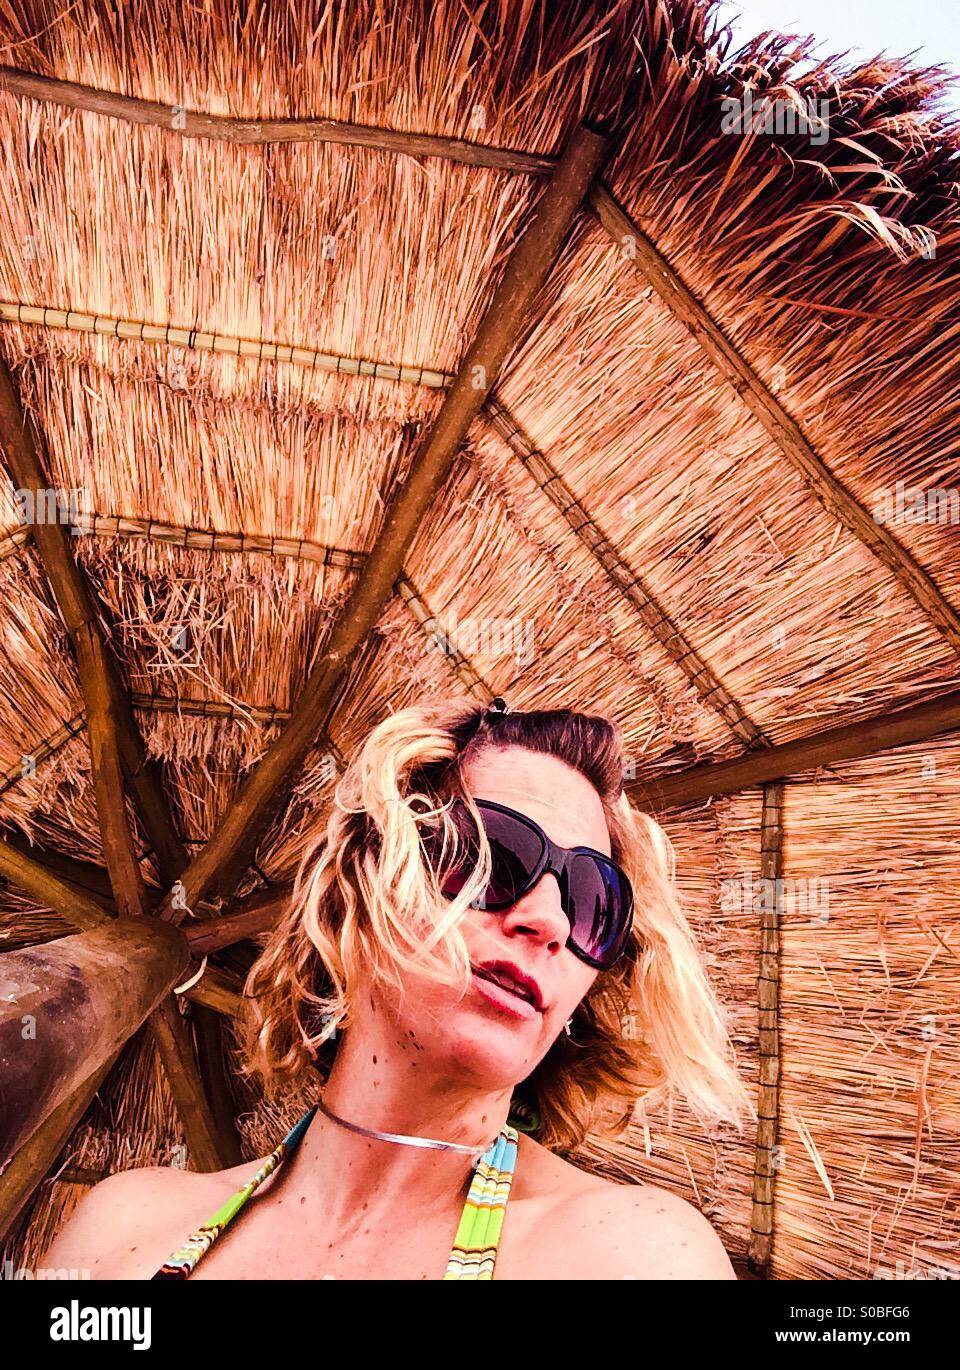 Woman in cabana Stock Photo